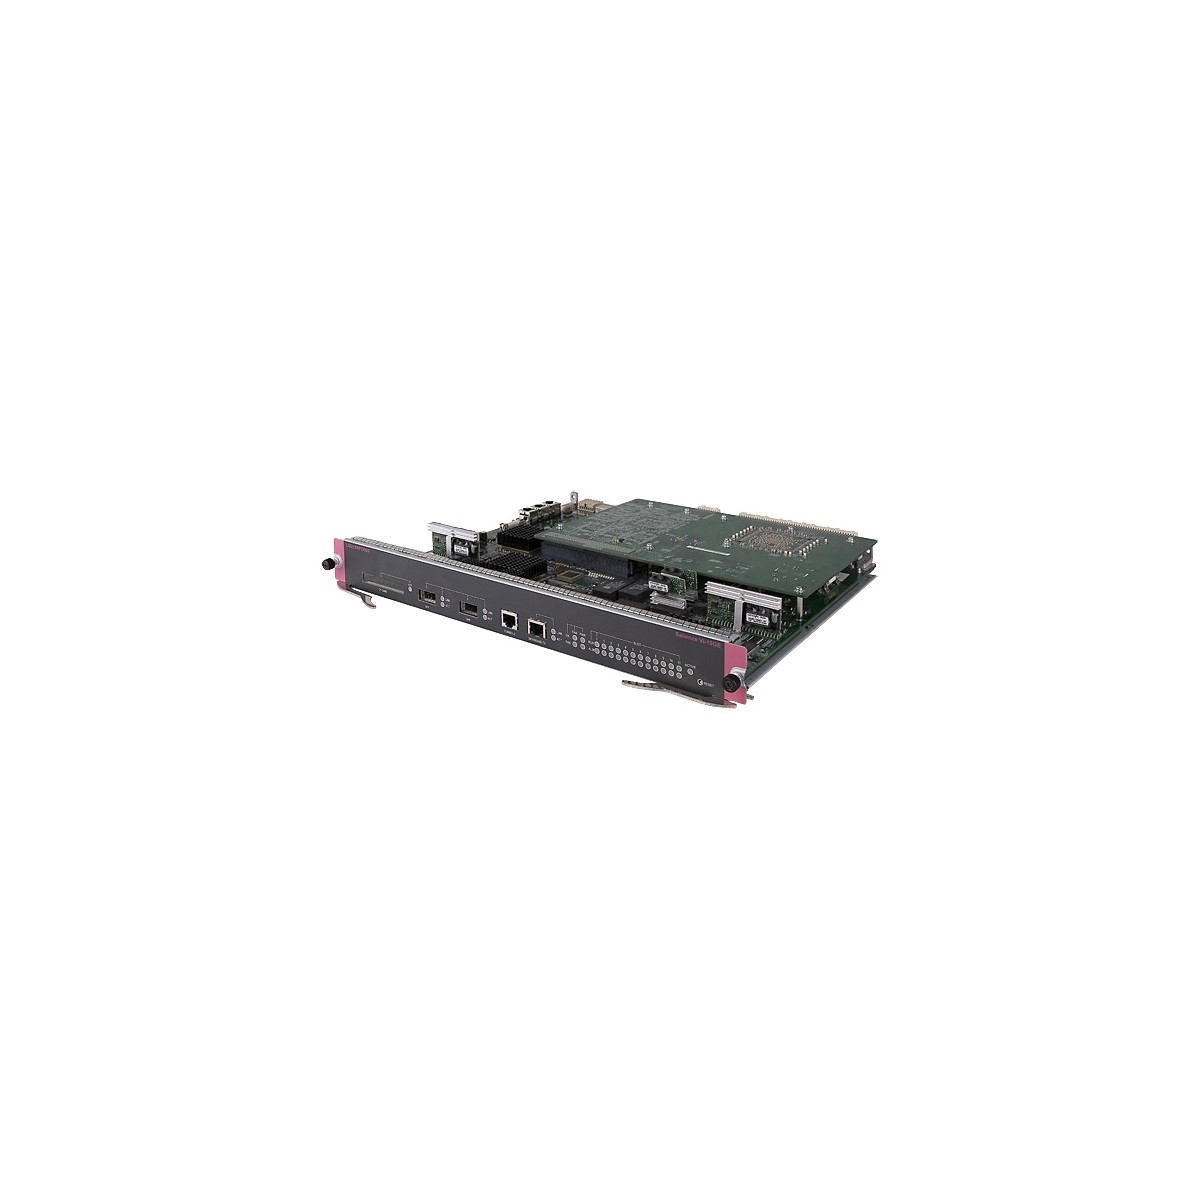 HPE 7500 384Gbps Fabric Module w/ 2 XFP Ports - 10 Gigabit - 10,100,1000,10000 Mbit/s - XFP - 384 Gbit/s - HP 7500 - 355 x 377 x